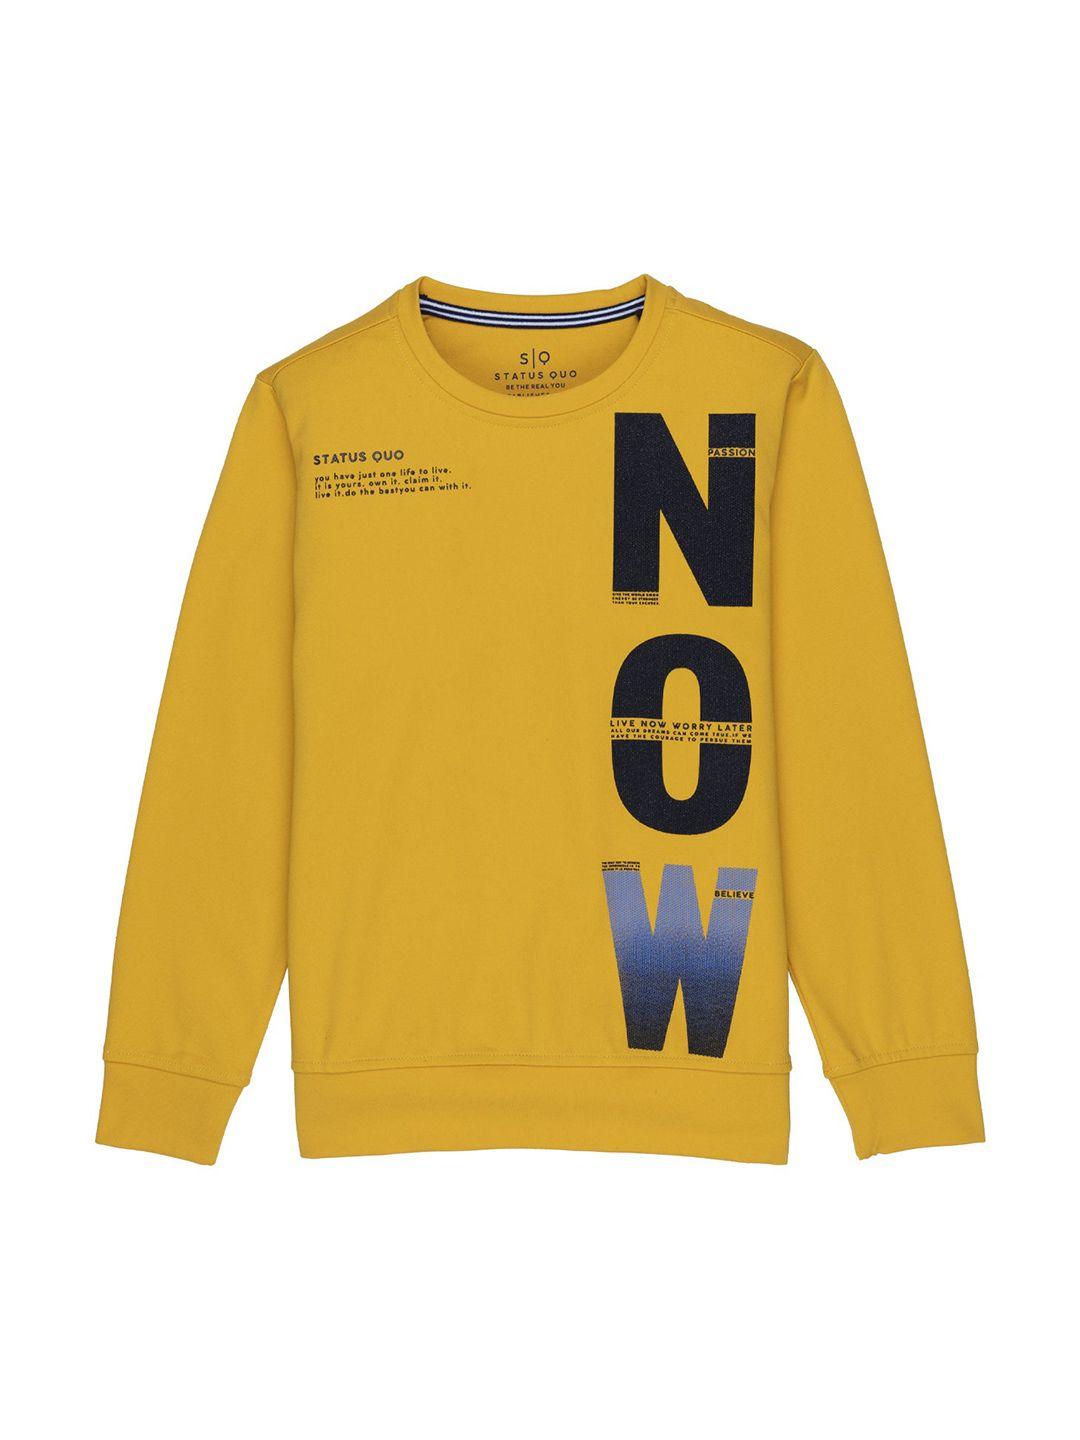 status quo boys gold-toned printed sweatshirt